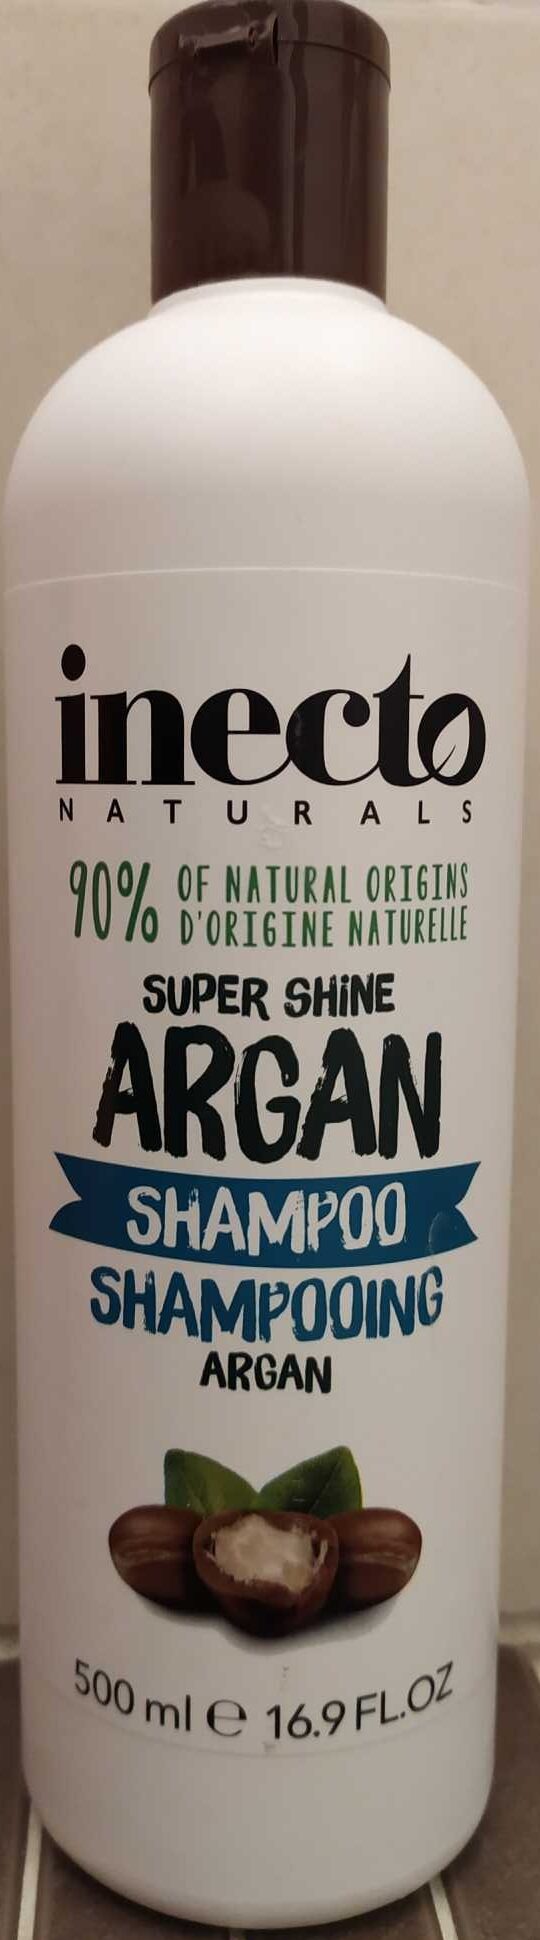 Shampoing ARGAN - Product - fr